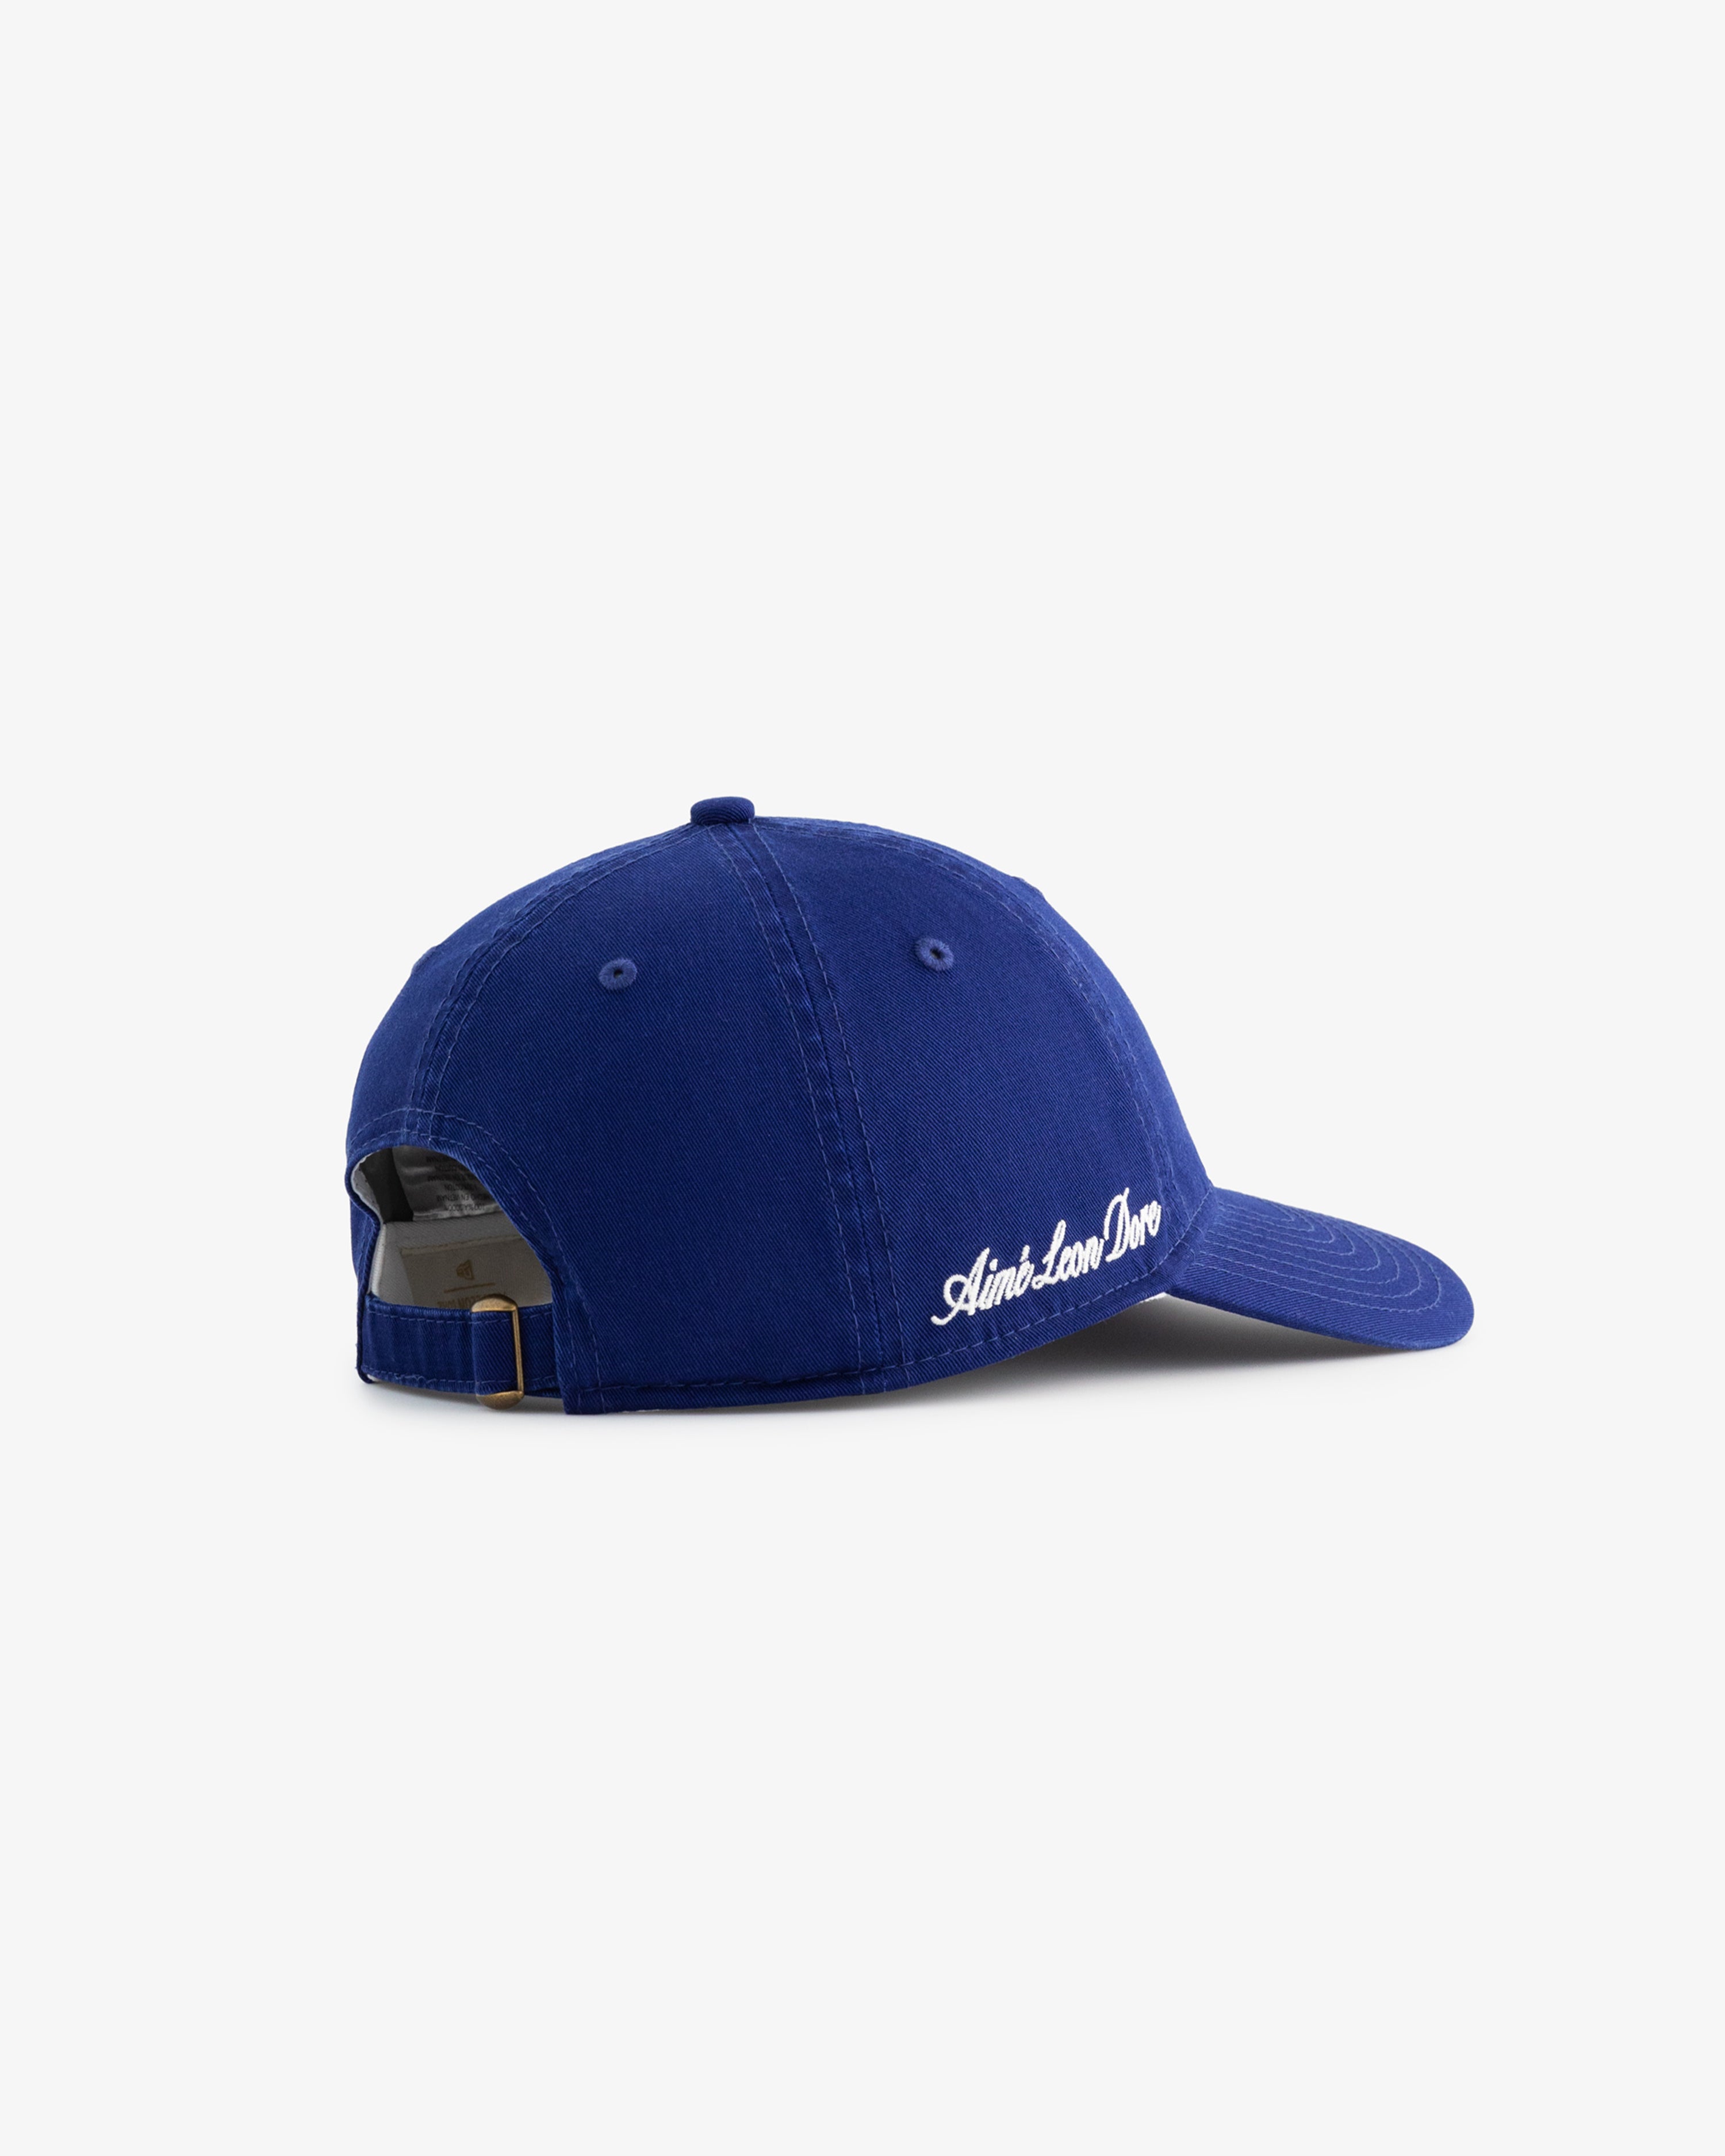 MLB New York Mets MVP Adjustable Hat, One Size 